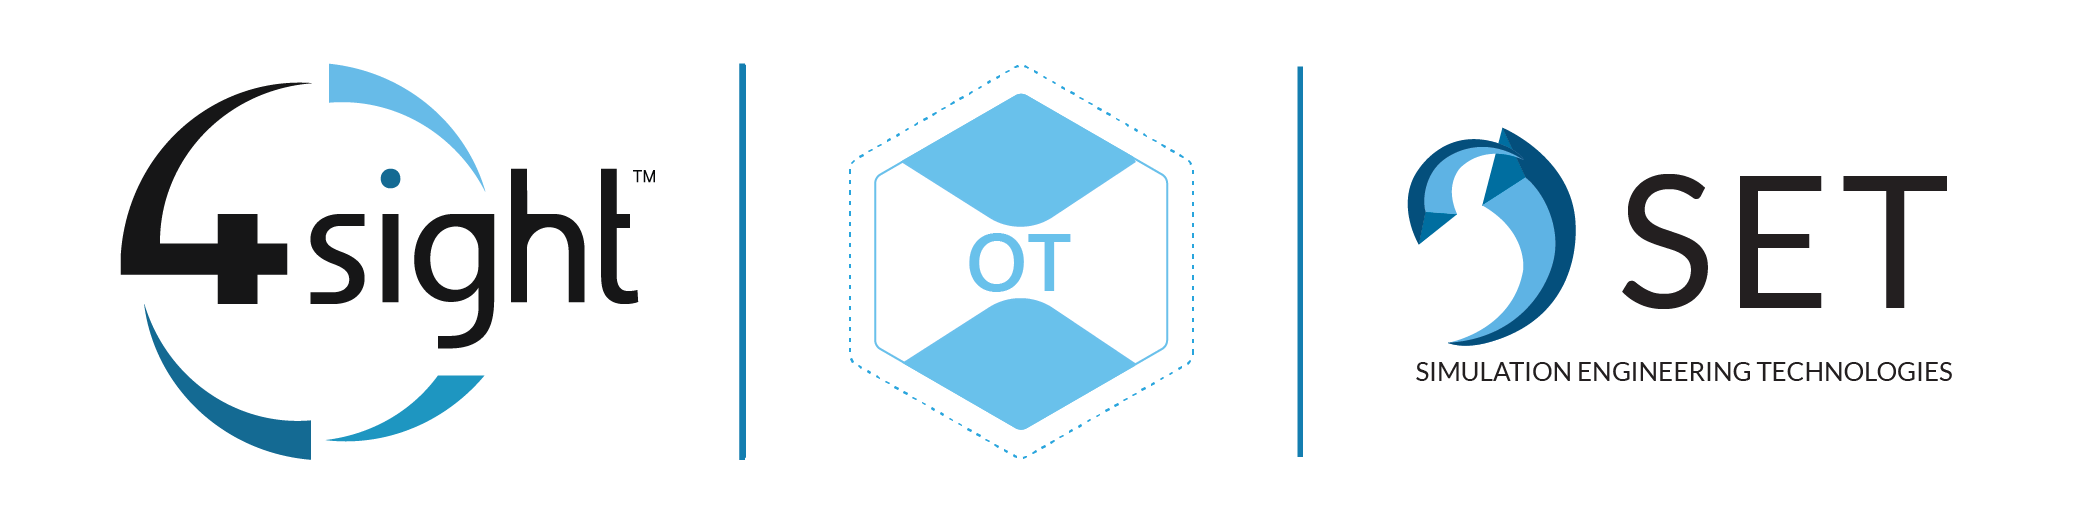 4Sight | OT | SET Logo